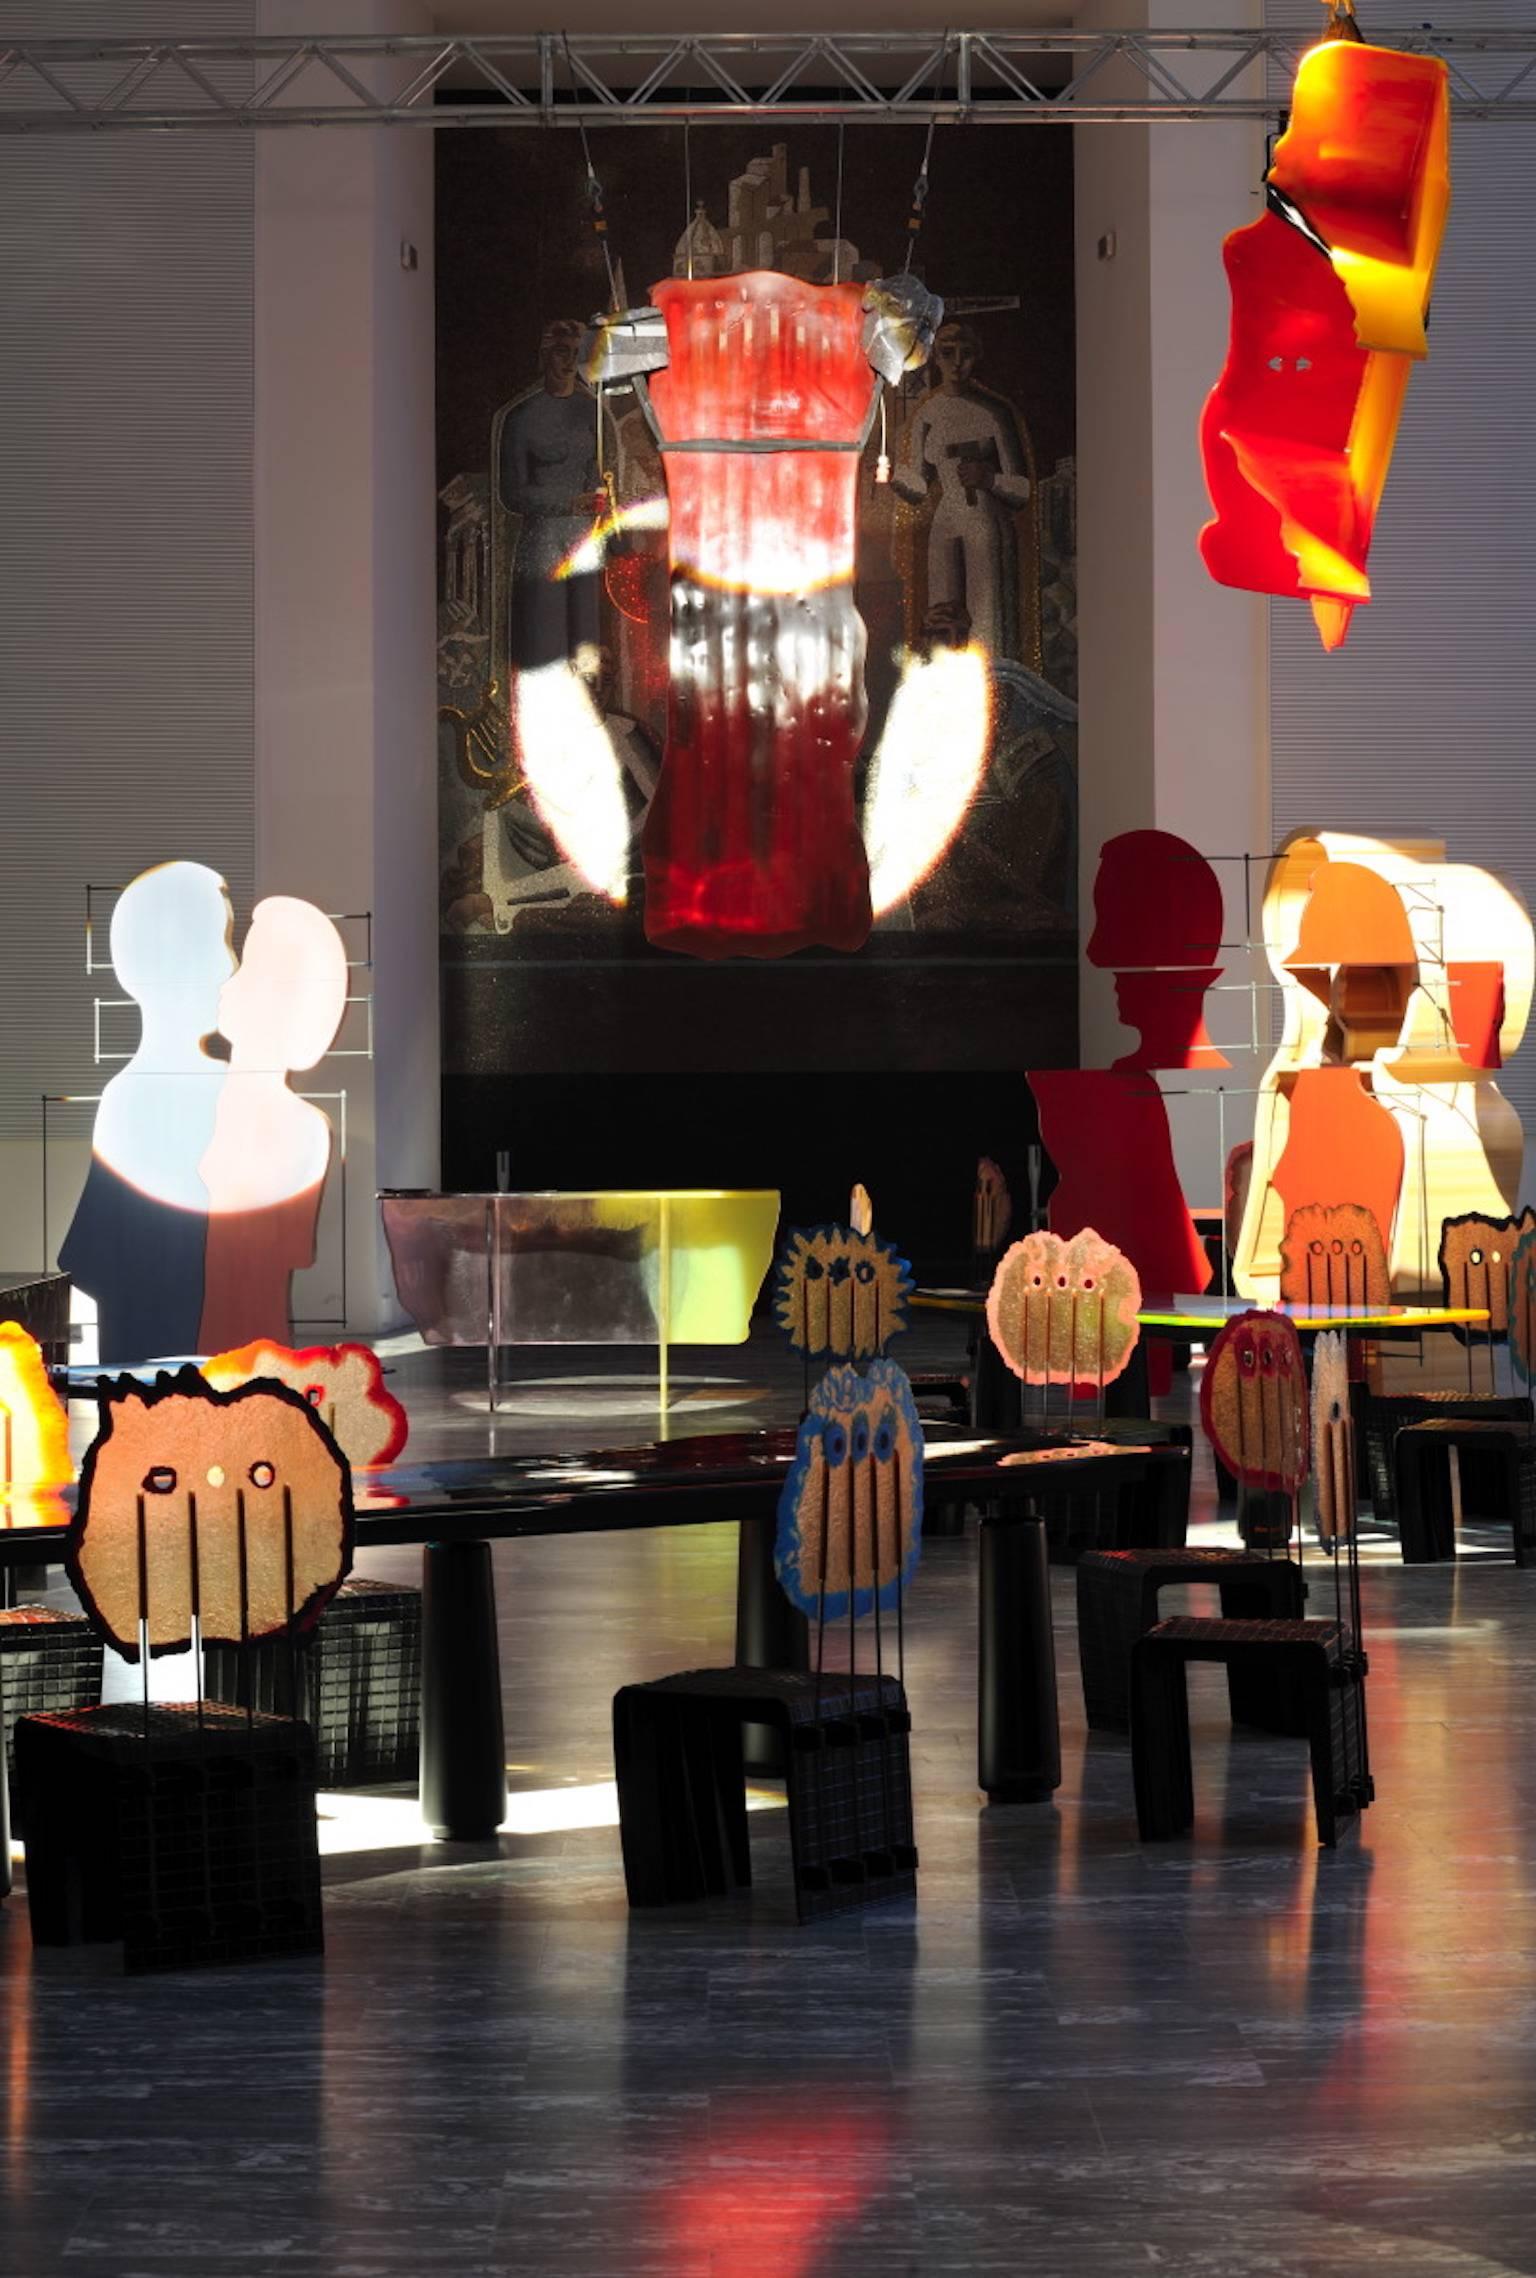 Contemporary Gaetano Pesce, Four Resin Chairs, L'Abbraccio Collection, Le Fablier, Italy 2010